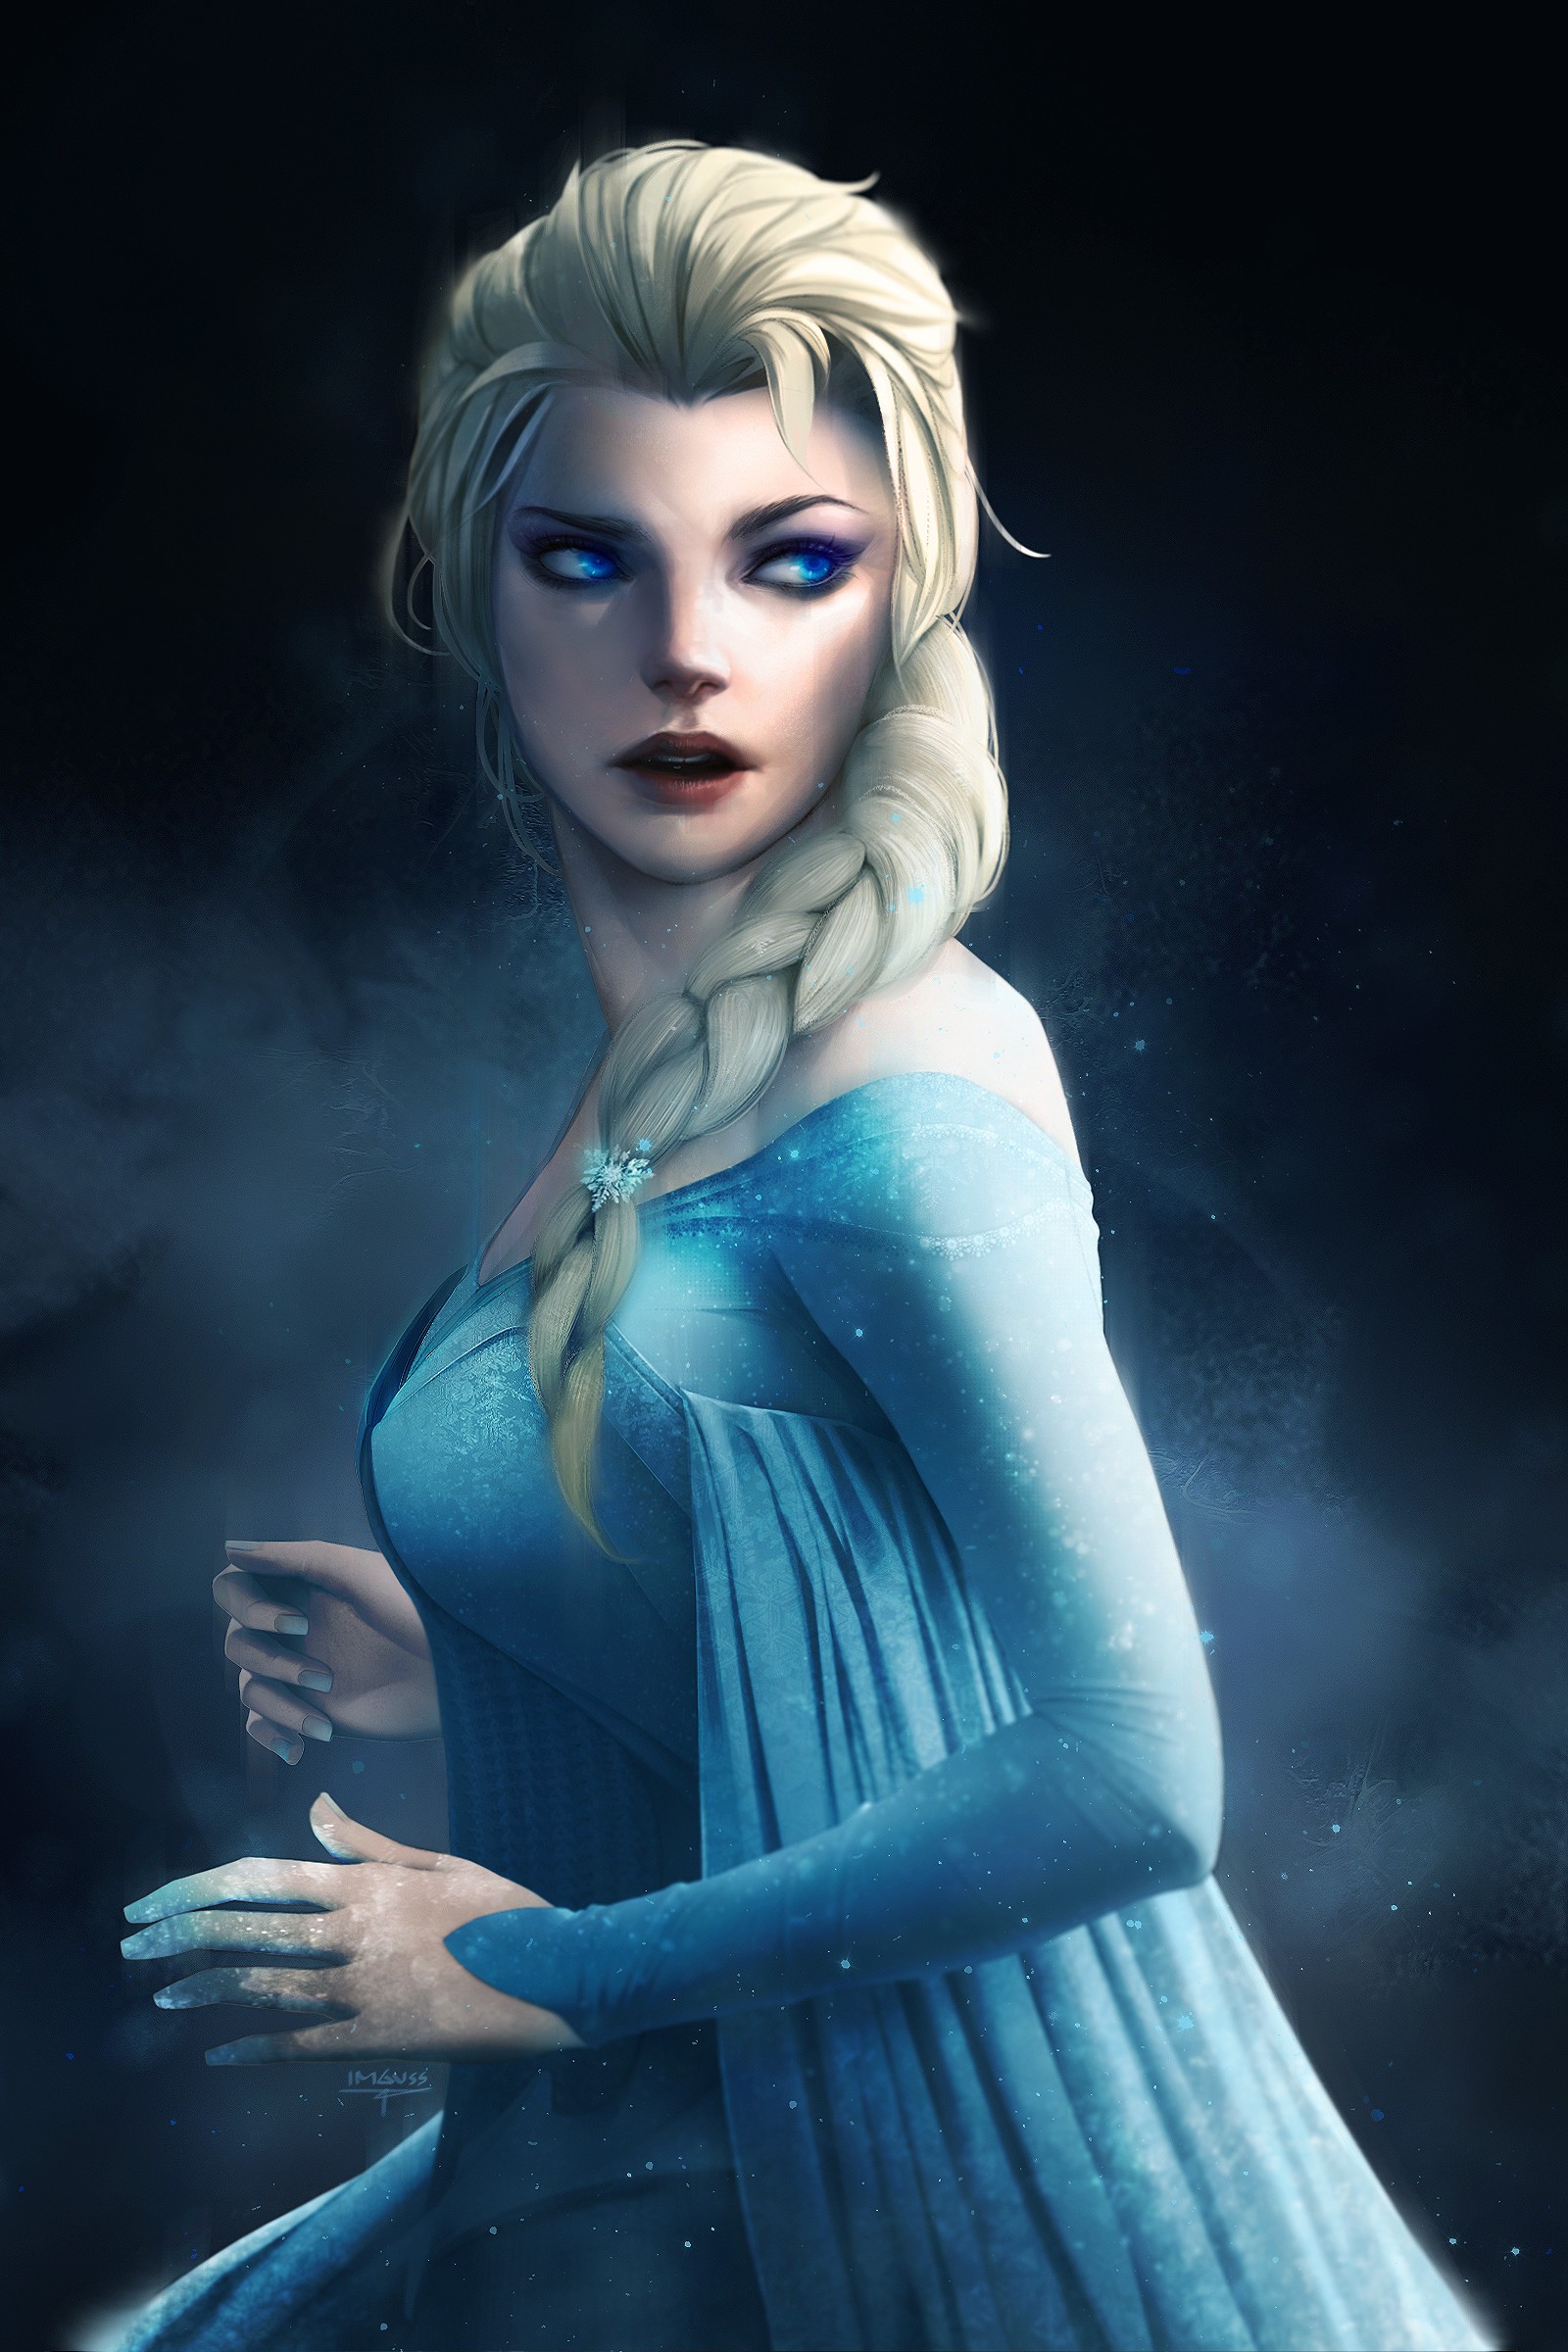 General 1600x2400 Princess Elsa artwork Frozen (movie) fantasy girl women blue dress dress blonde long hair cyan nails painted nails looking away Disney